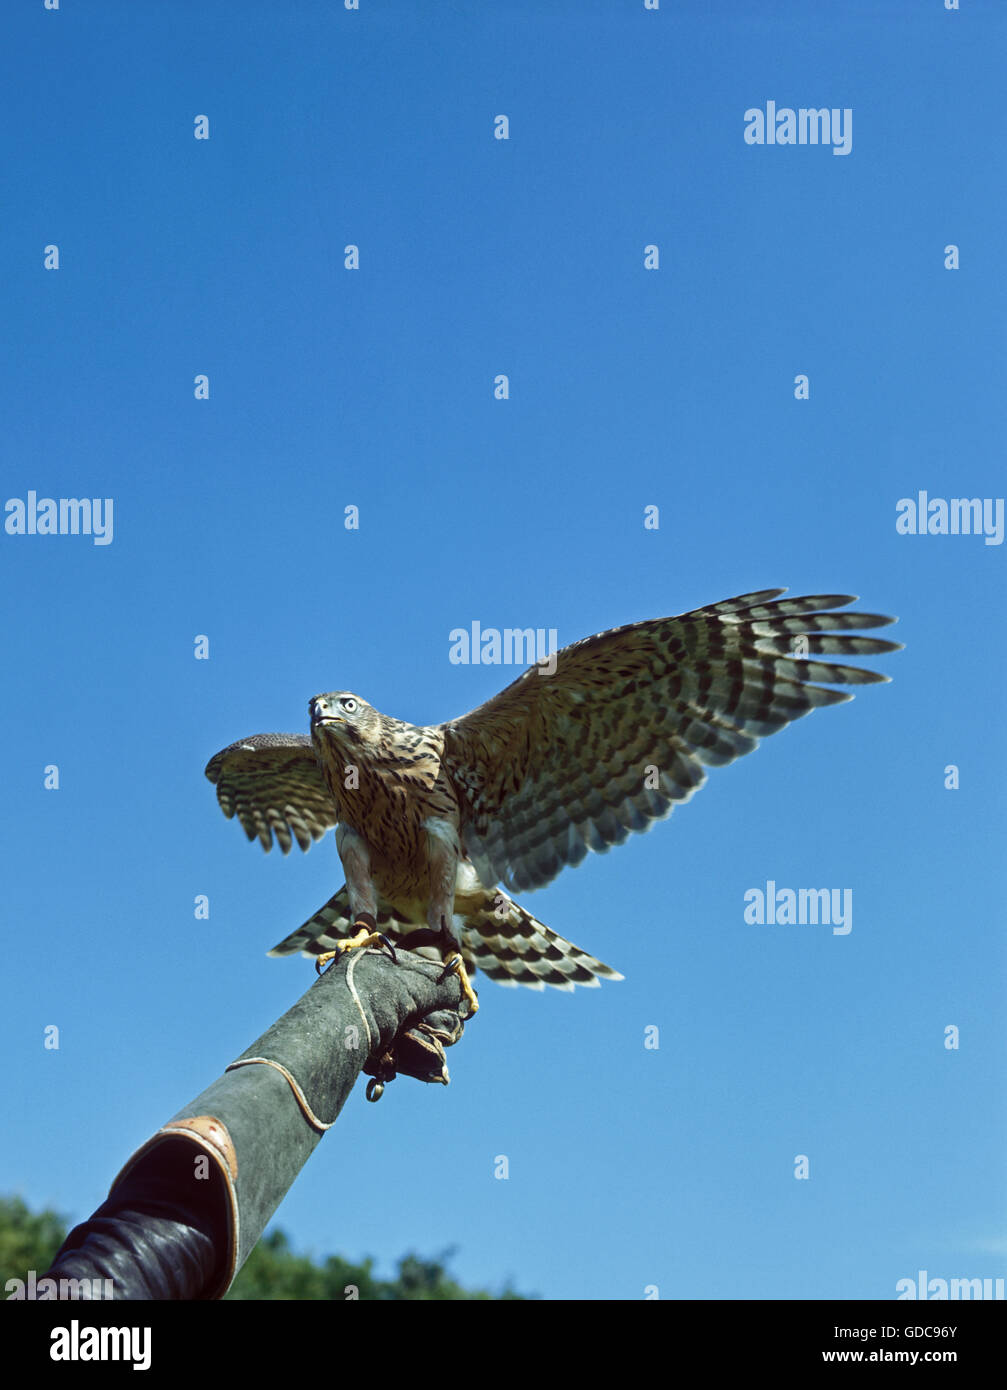 Falconer with Goshawk, accipiter gentilis Stock Photo